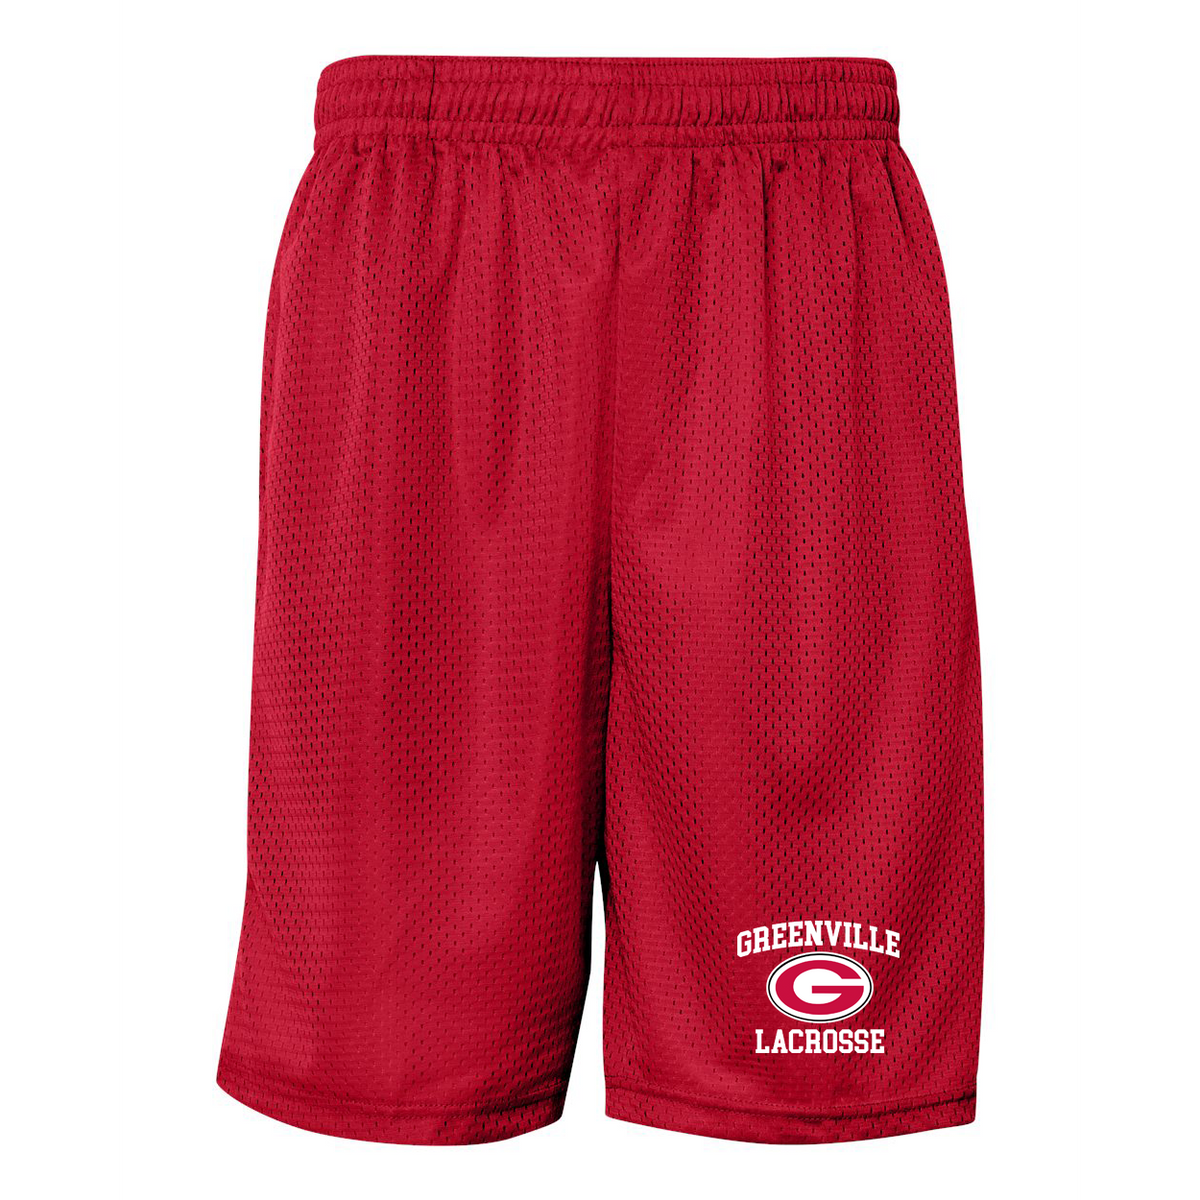 Greenville Lacrosse Badger Pro Mesh Shorts w/ Pockets